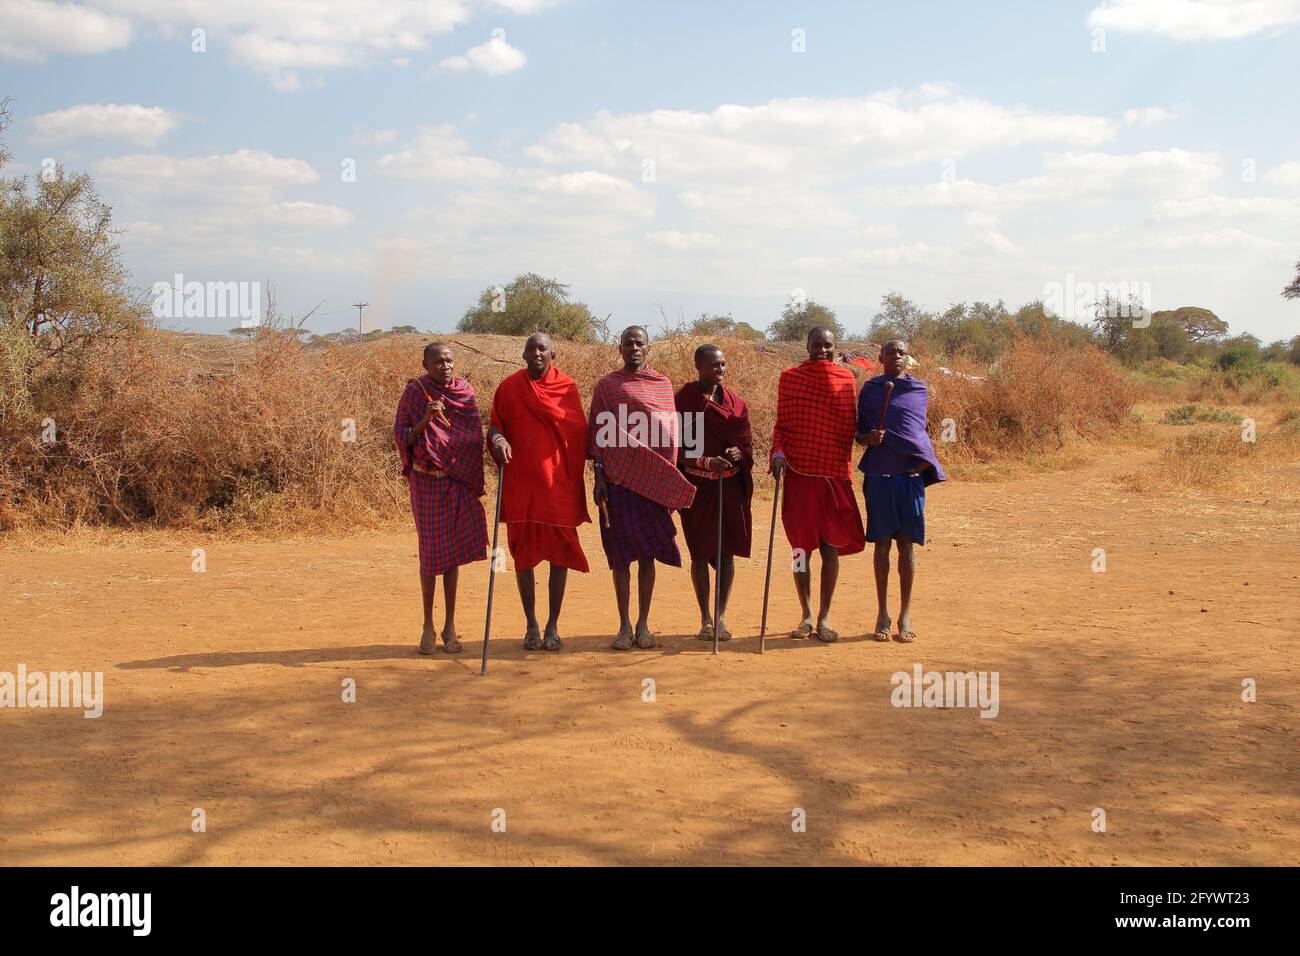 KENYA, AMBOSELI NATIONAL PARK - AUGUST 04, 2018: Maasai men group Stock Photo